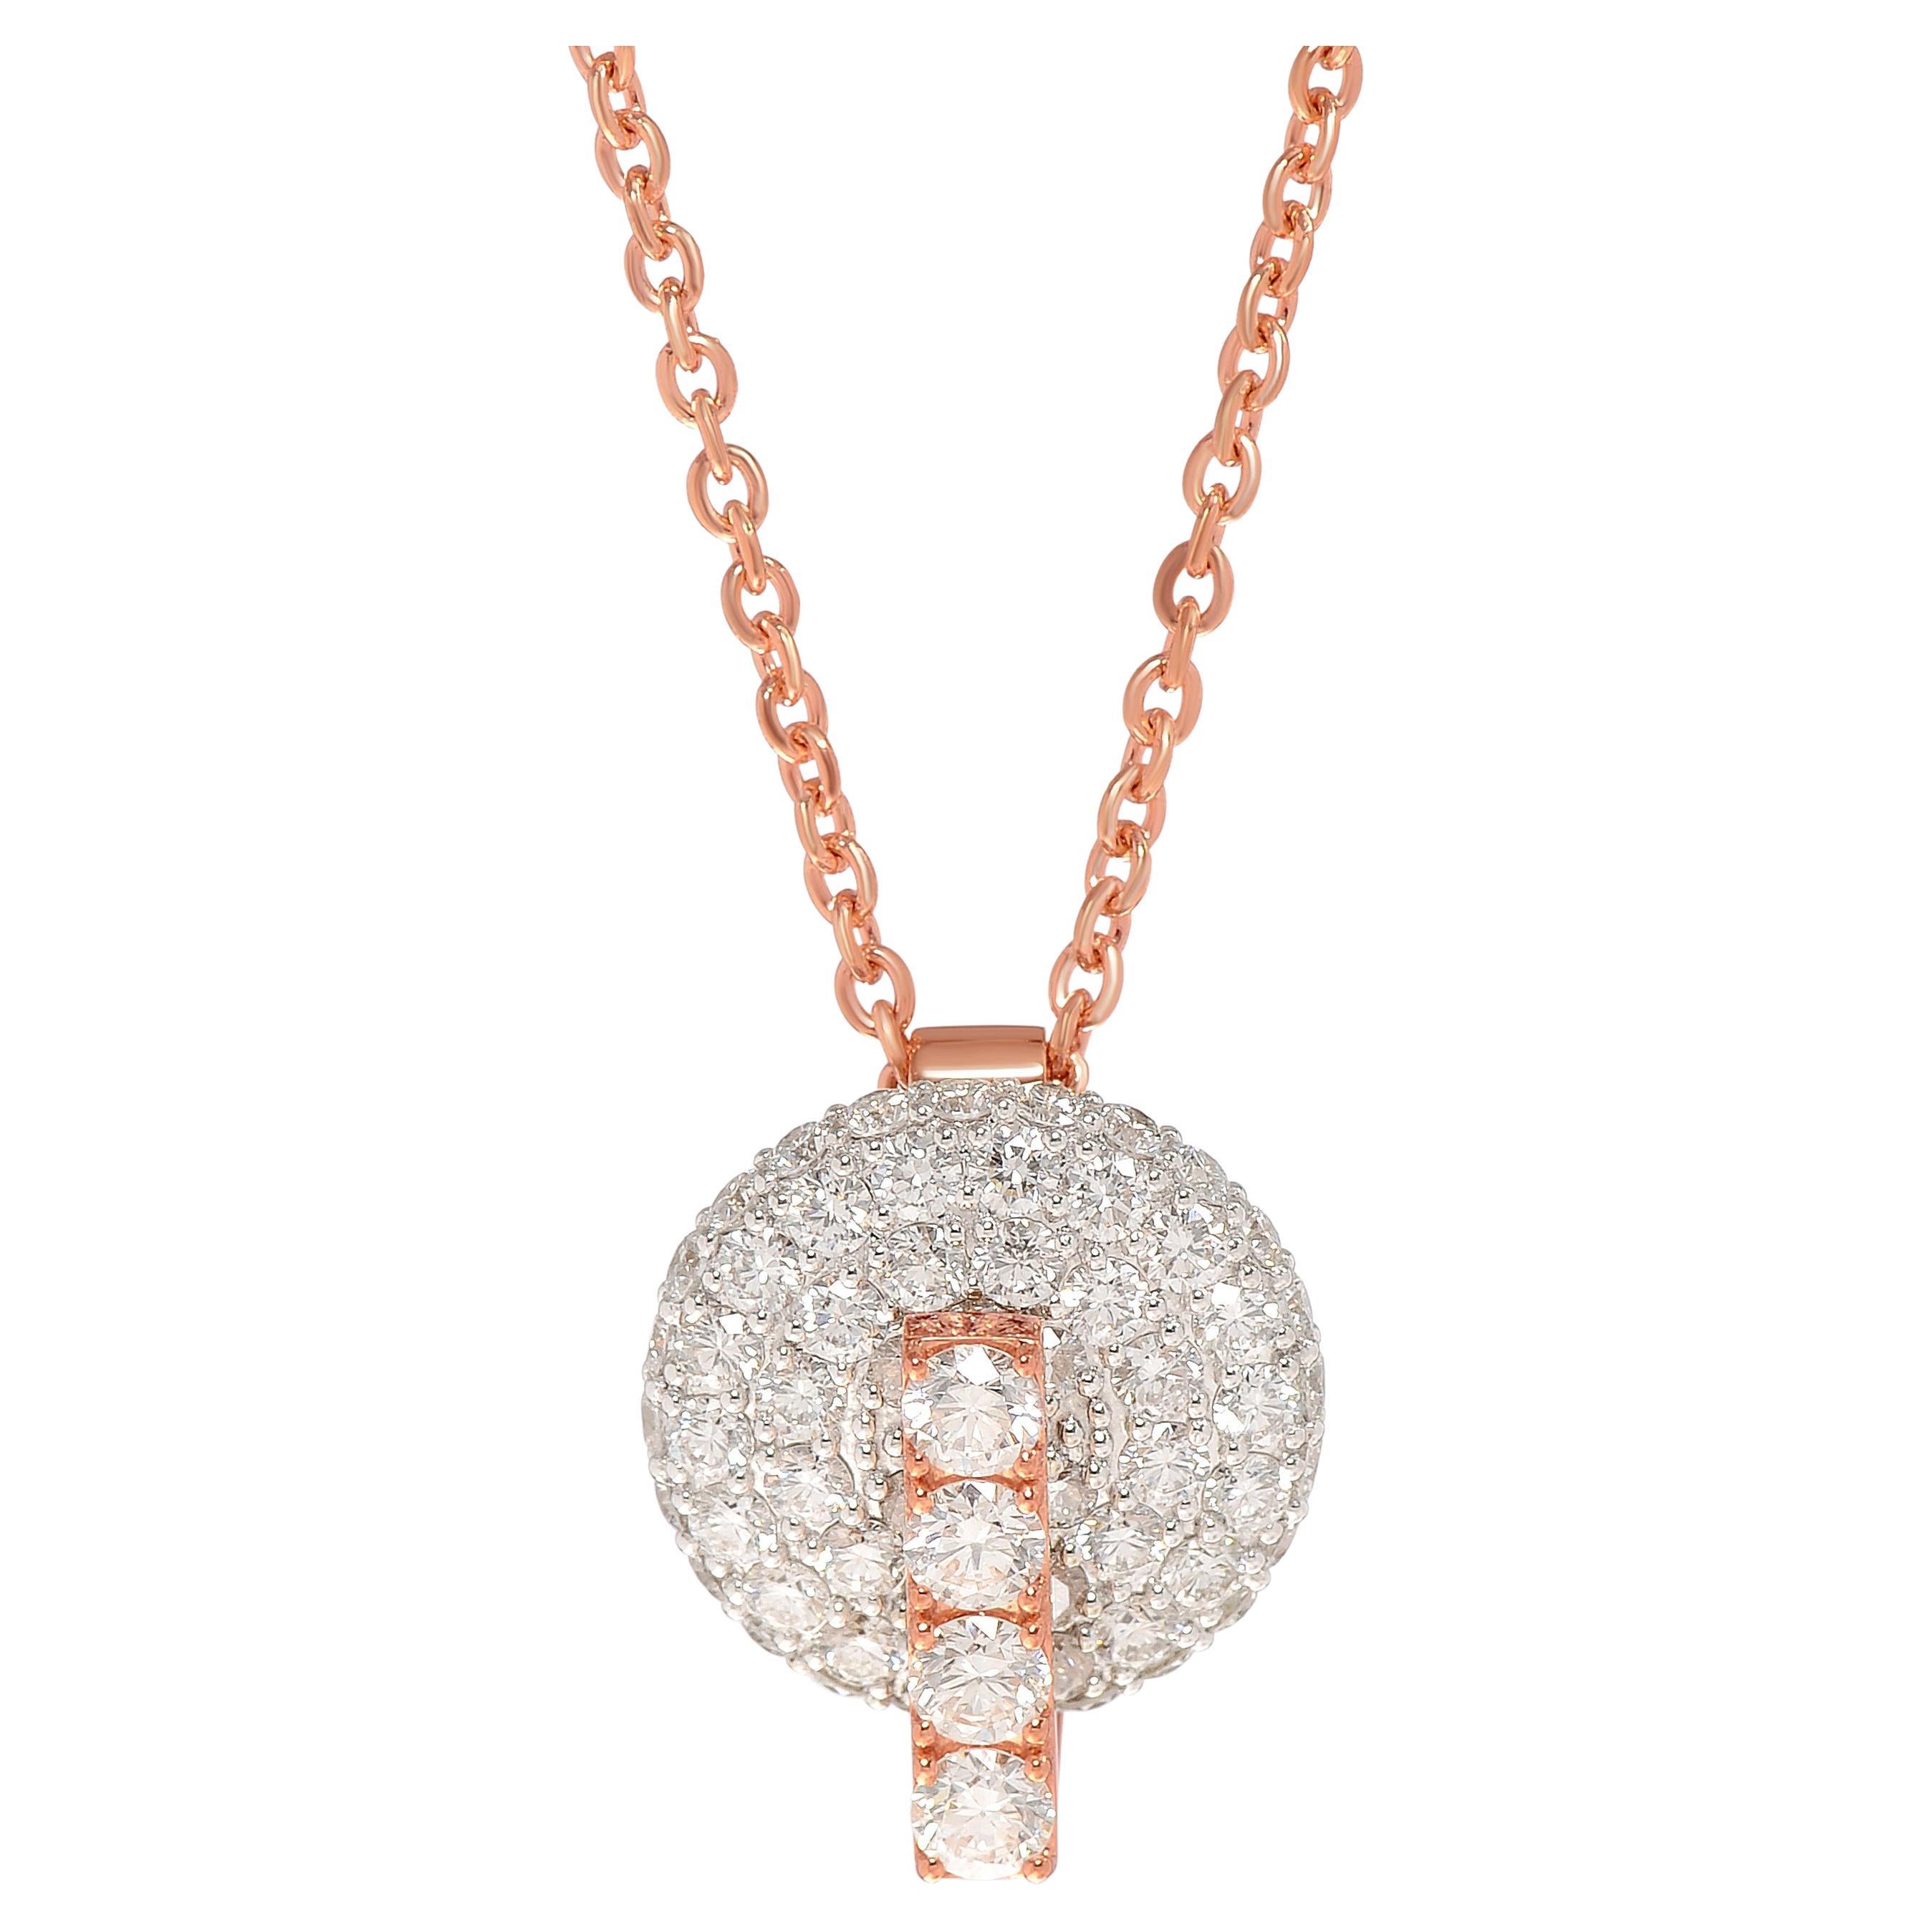 Roberto Coin 18K Rose & White Gold, Diamond Pendant Necklace